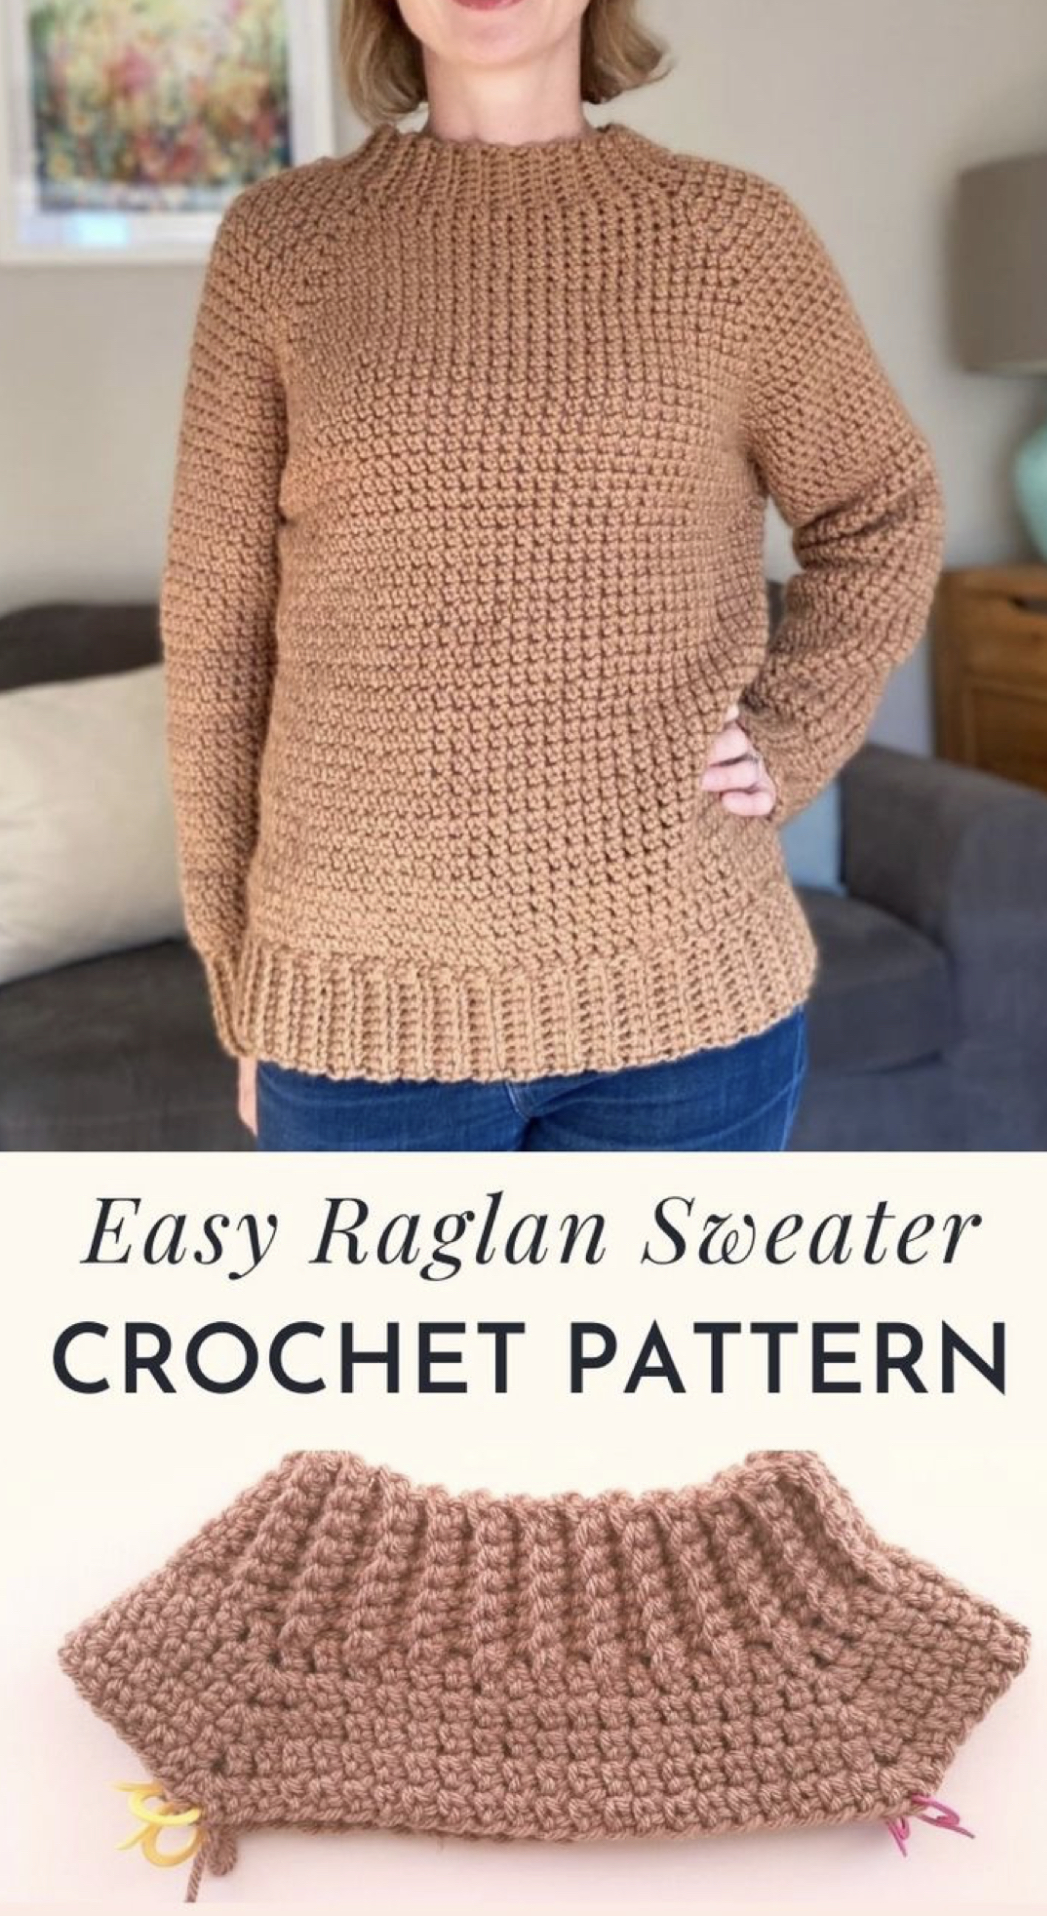 Beara Chunky Crochet Raglan Sweater Pattern (FREE) – FREE CROCHET ...